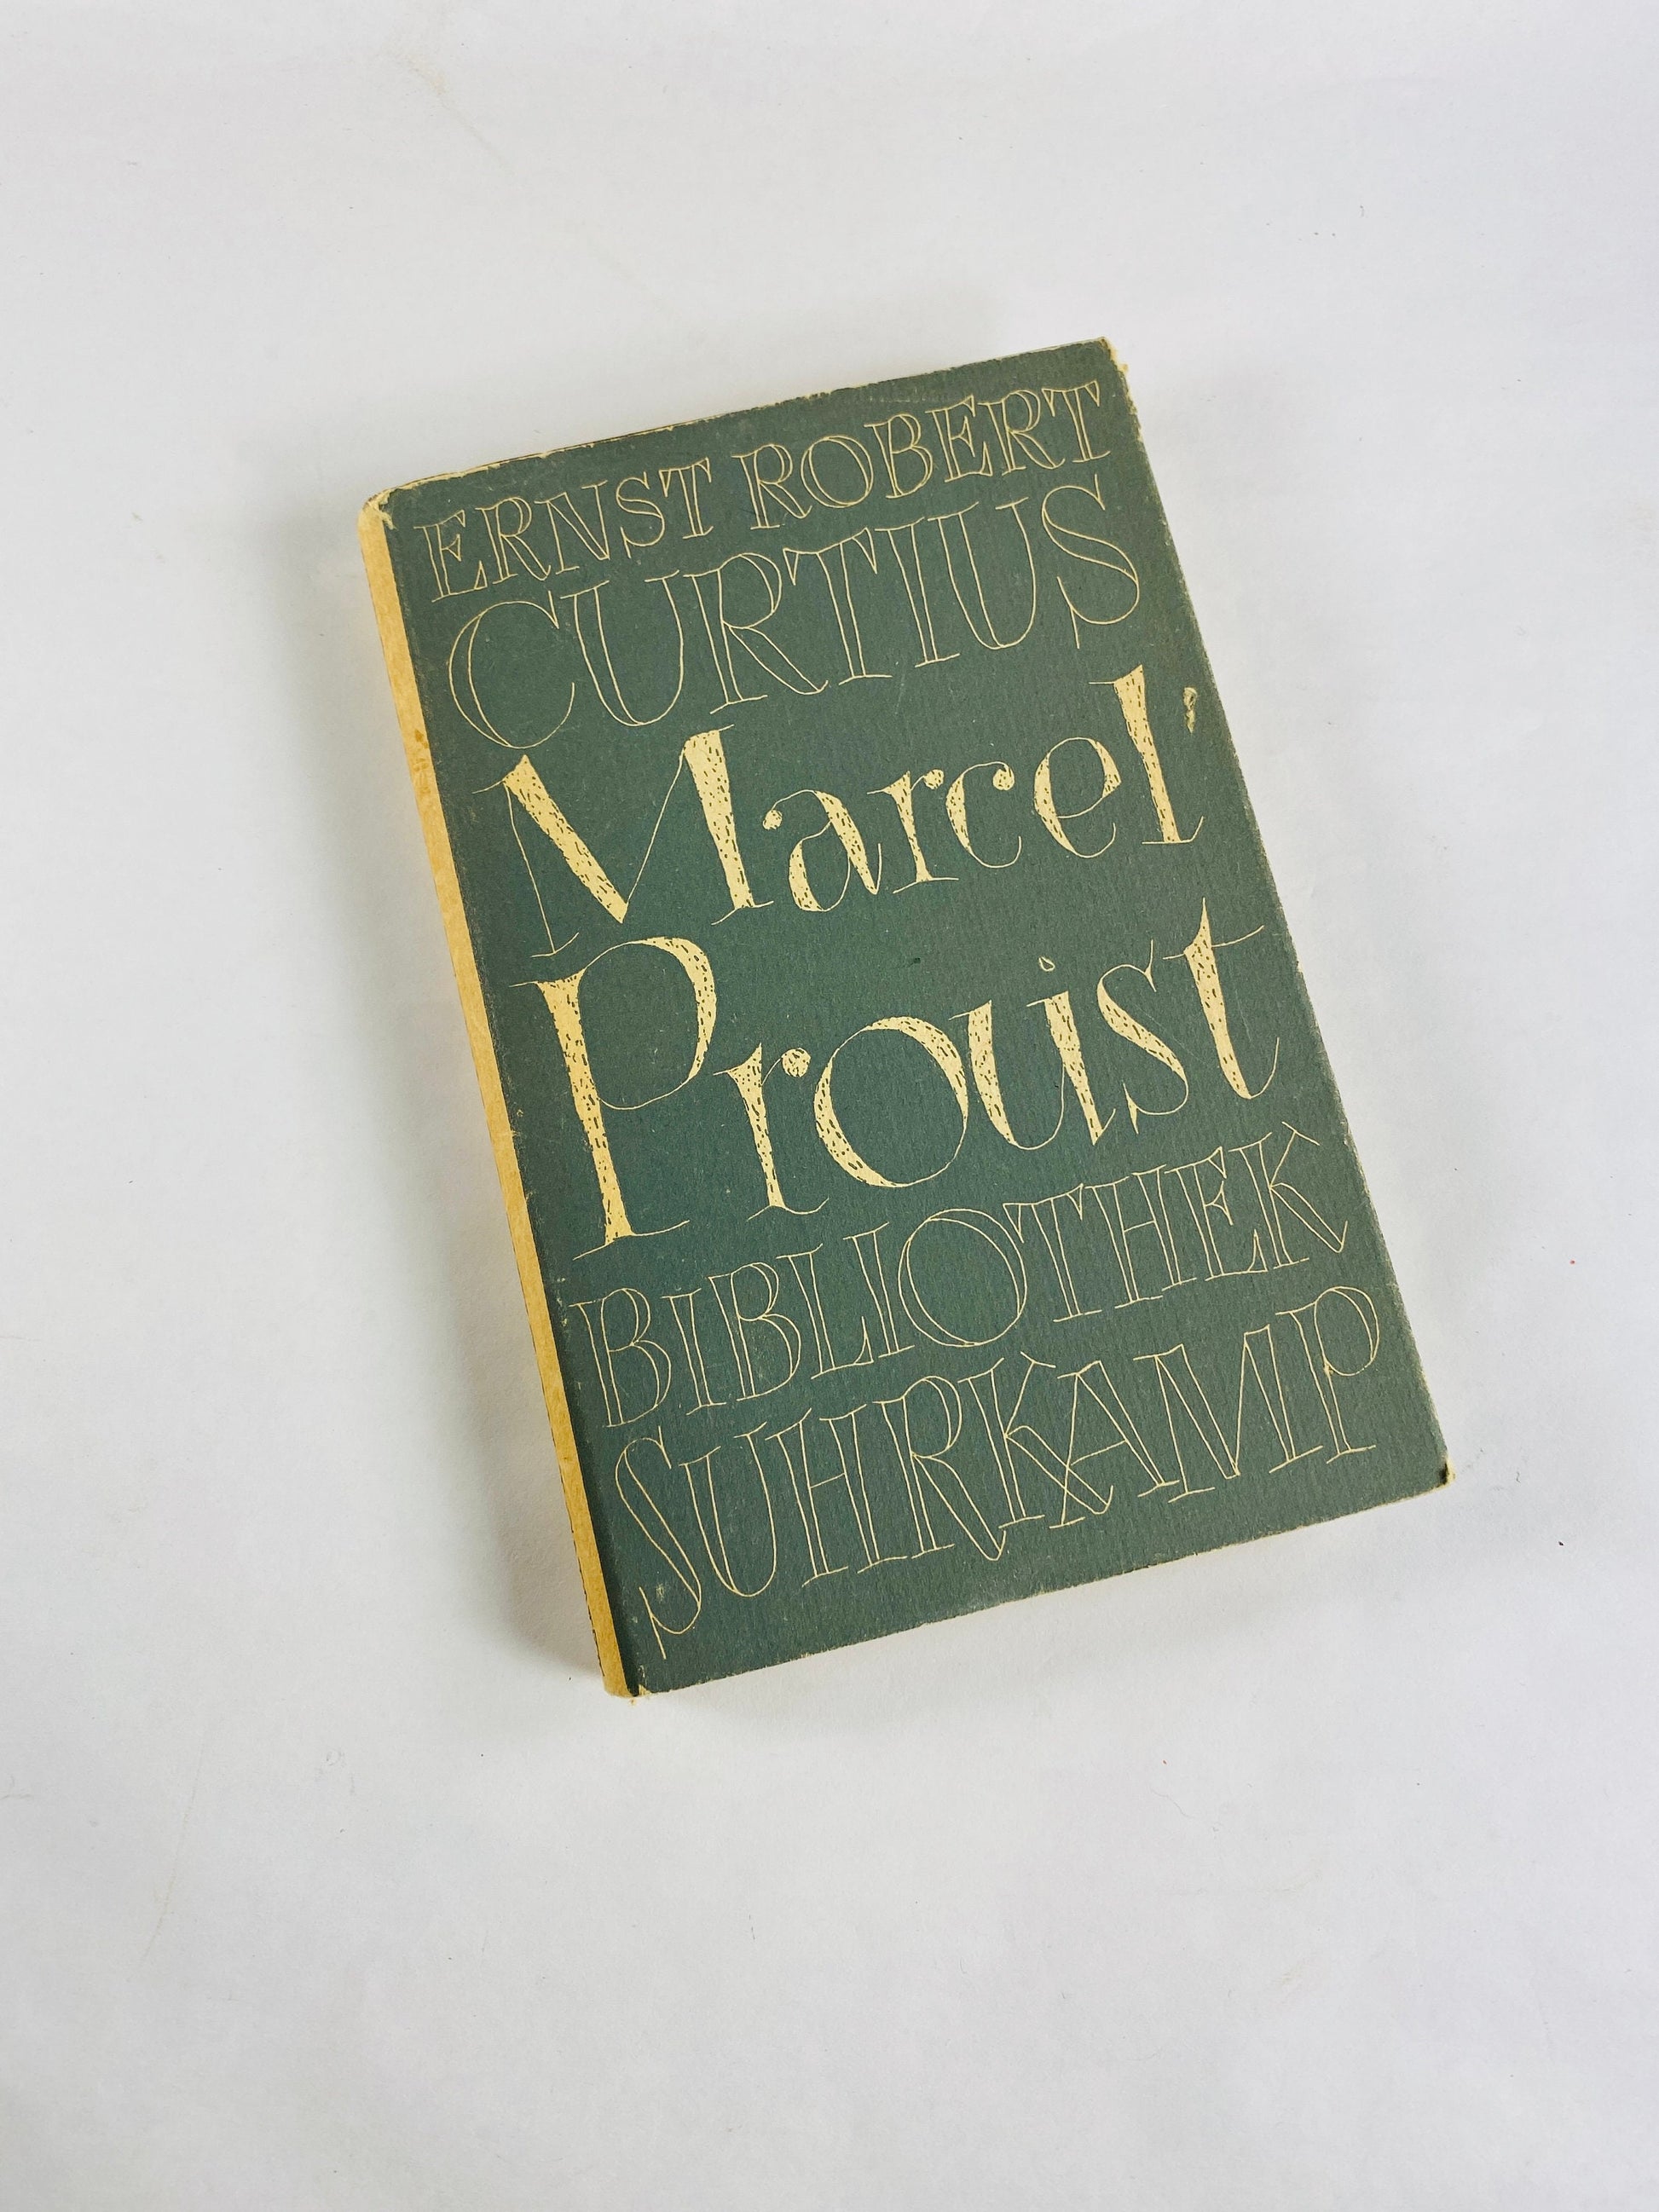 Ernst Robert Curtius Marcel Proust vintage collector book circa 1952 FIRST EDITION literary critique written in original German